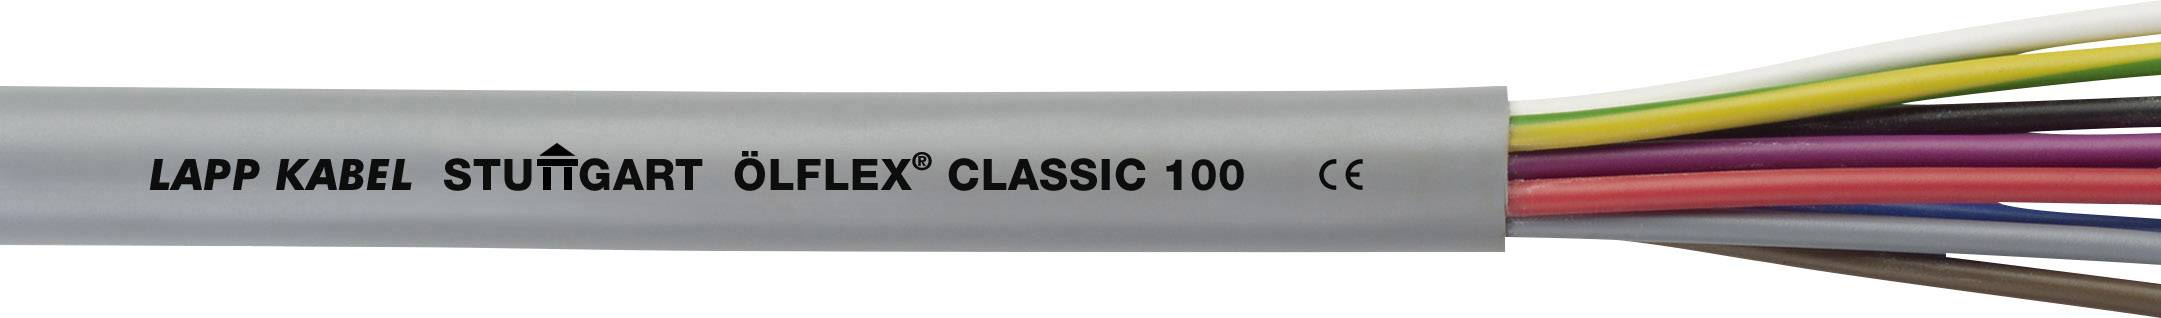 LAPP KABEL Steuerleitung ÖLFLEX® CLASSIC 100 5 G 6 mm² Grau LappKabel 1120812/50 50 m